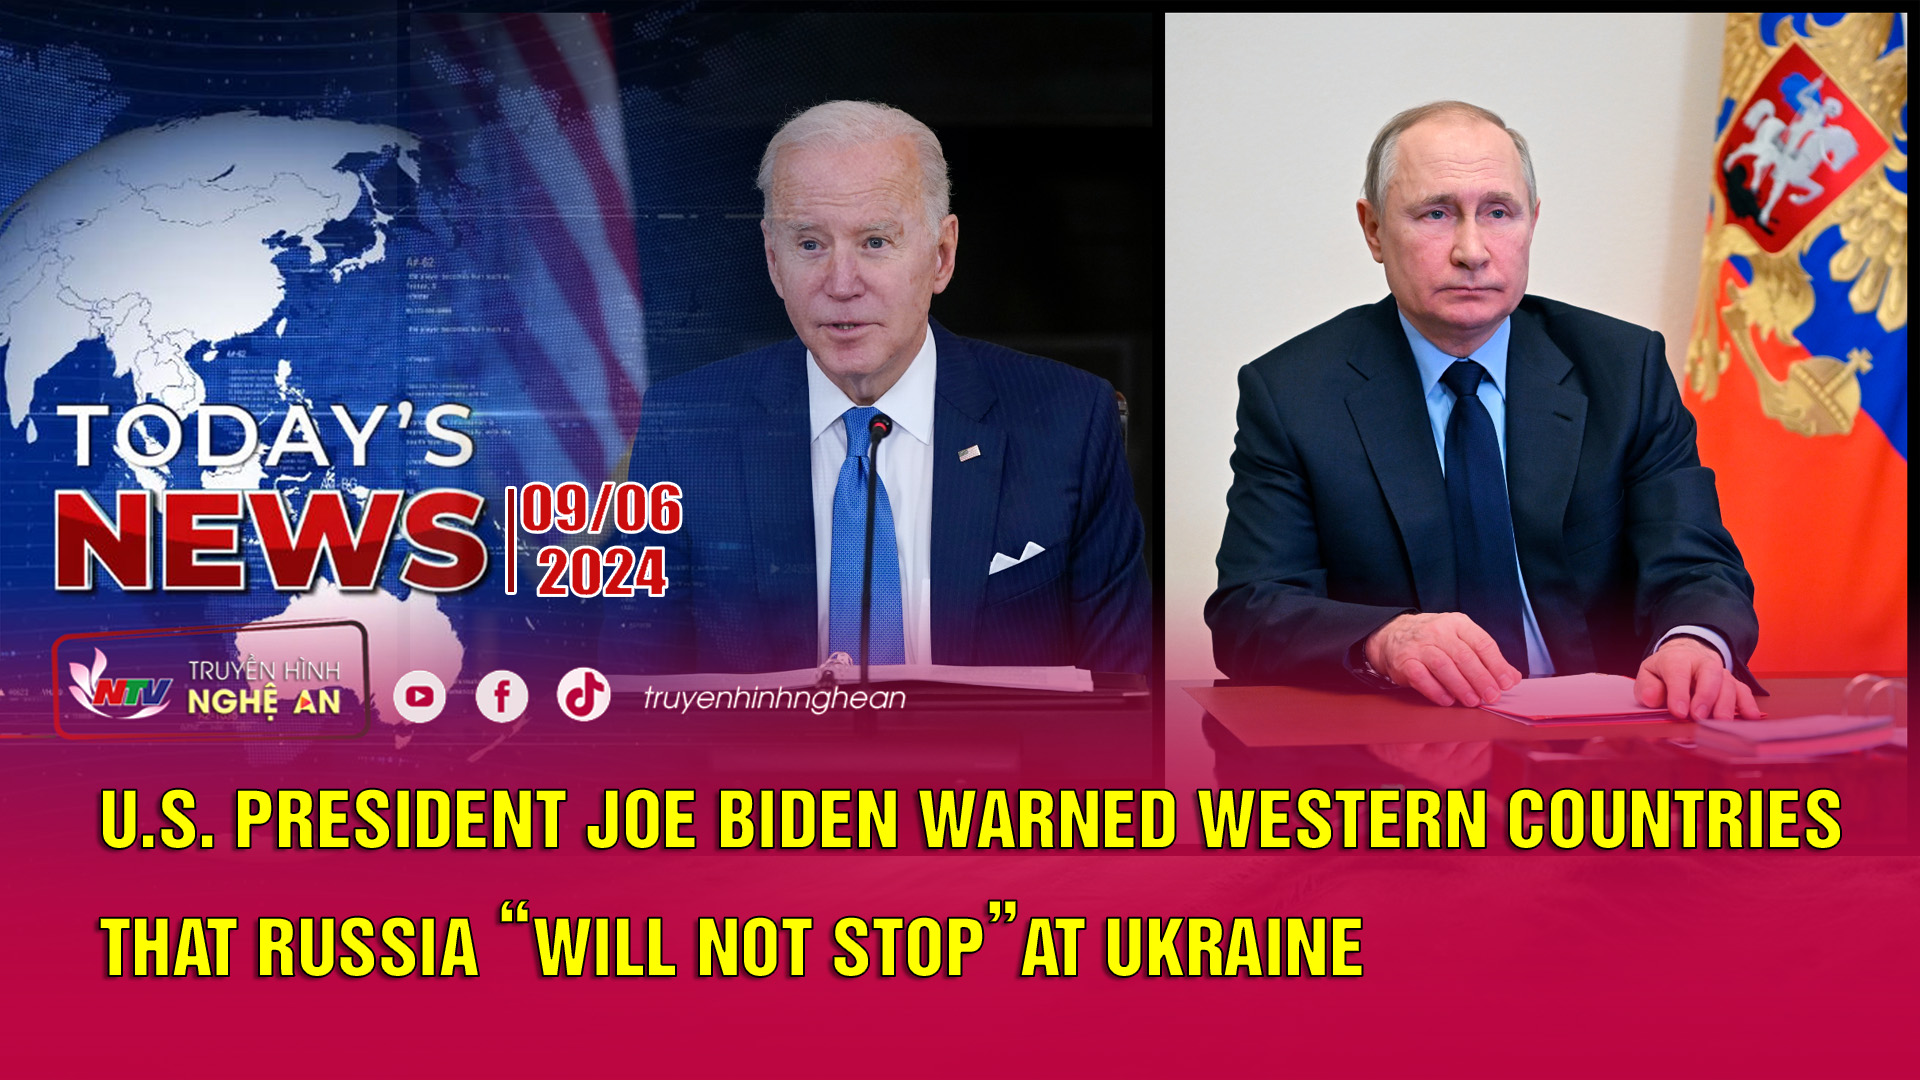 Today's News - 09/06/2024:  U.S. President Joe Biden warned Western countries that Russia “will not stop”at Ukraine.